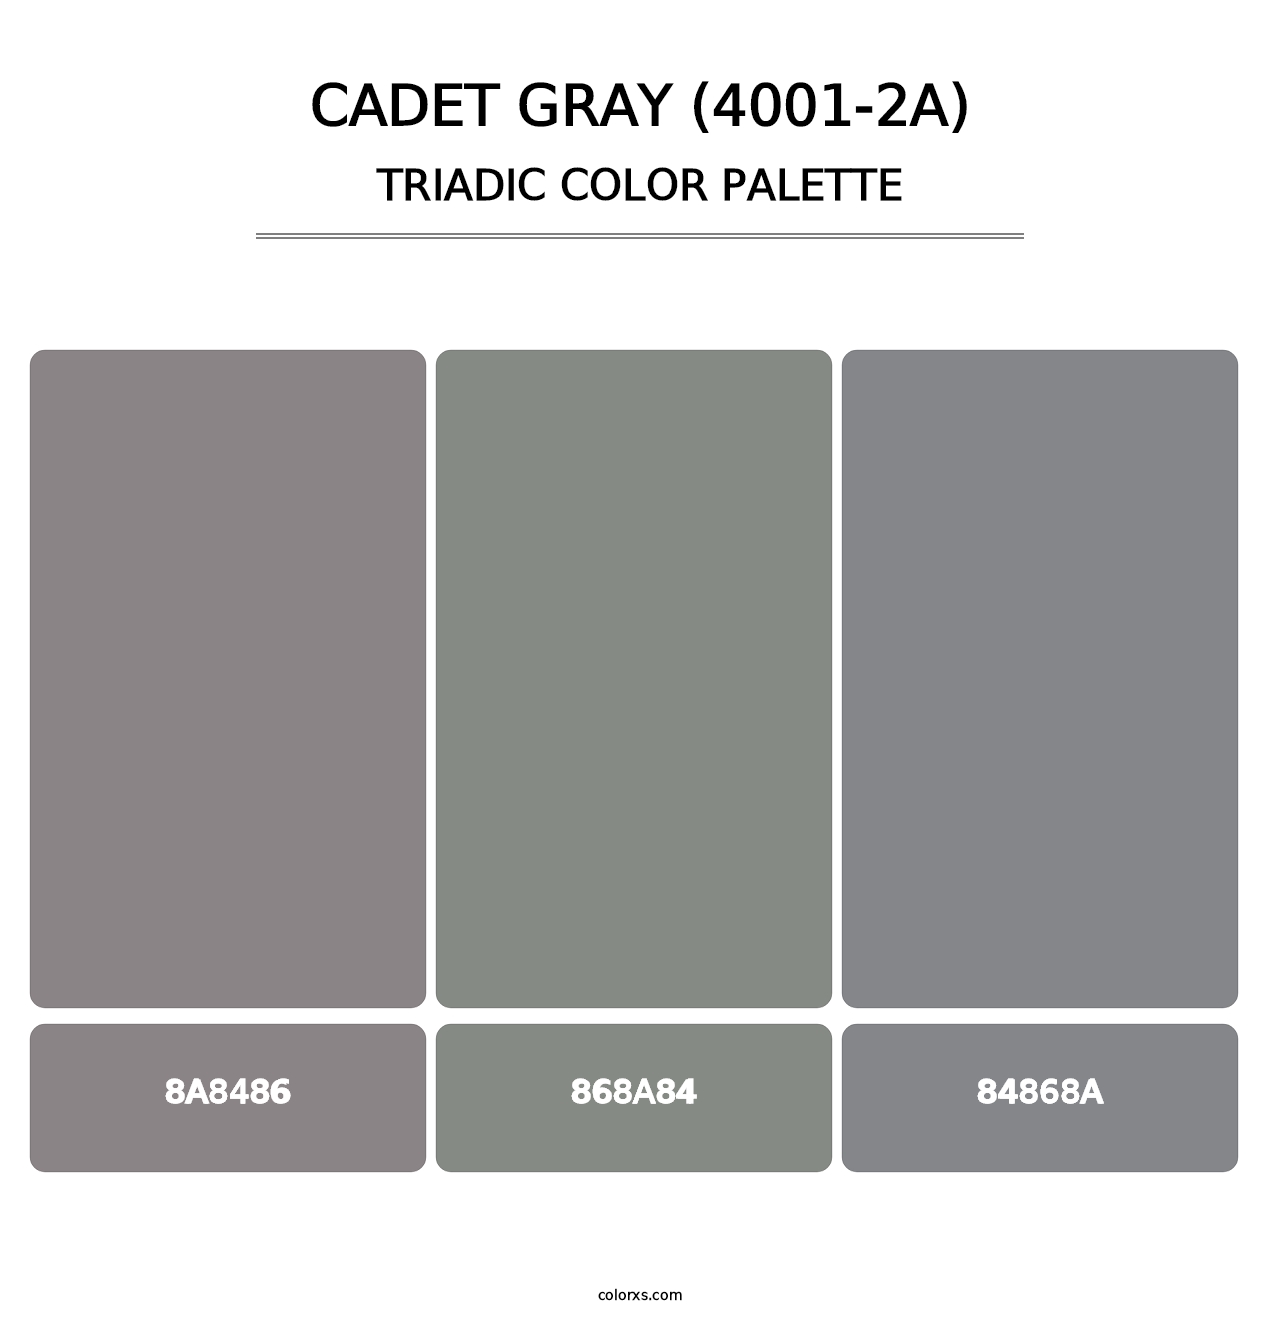 Cadet Gray (4001-2A) - Triadic Color Palette